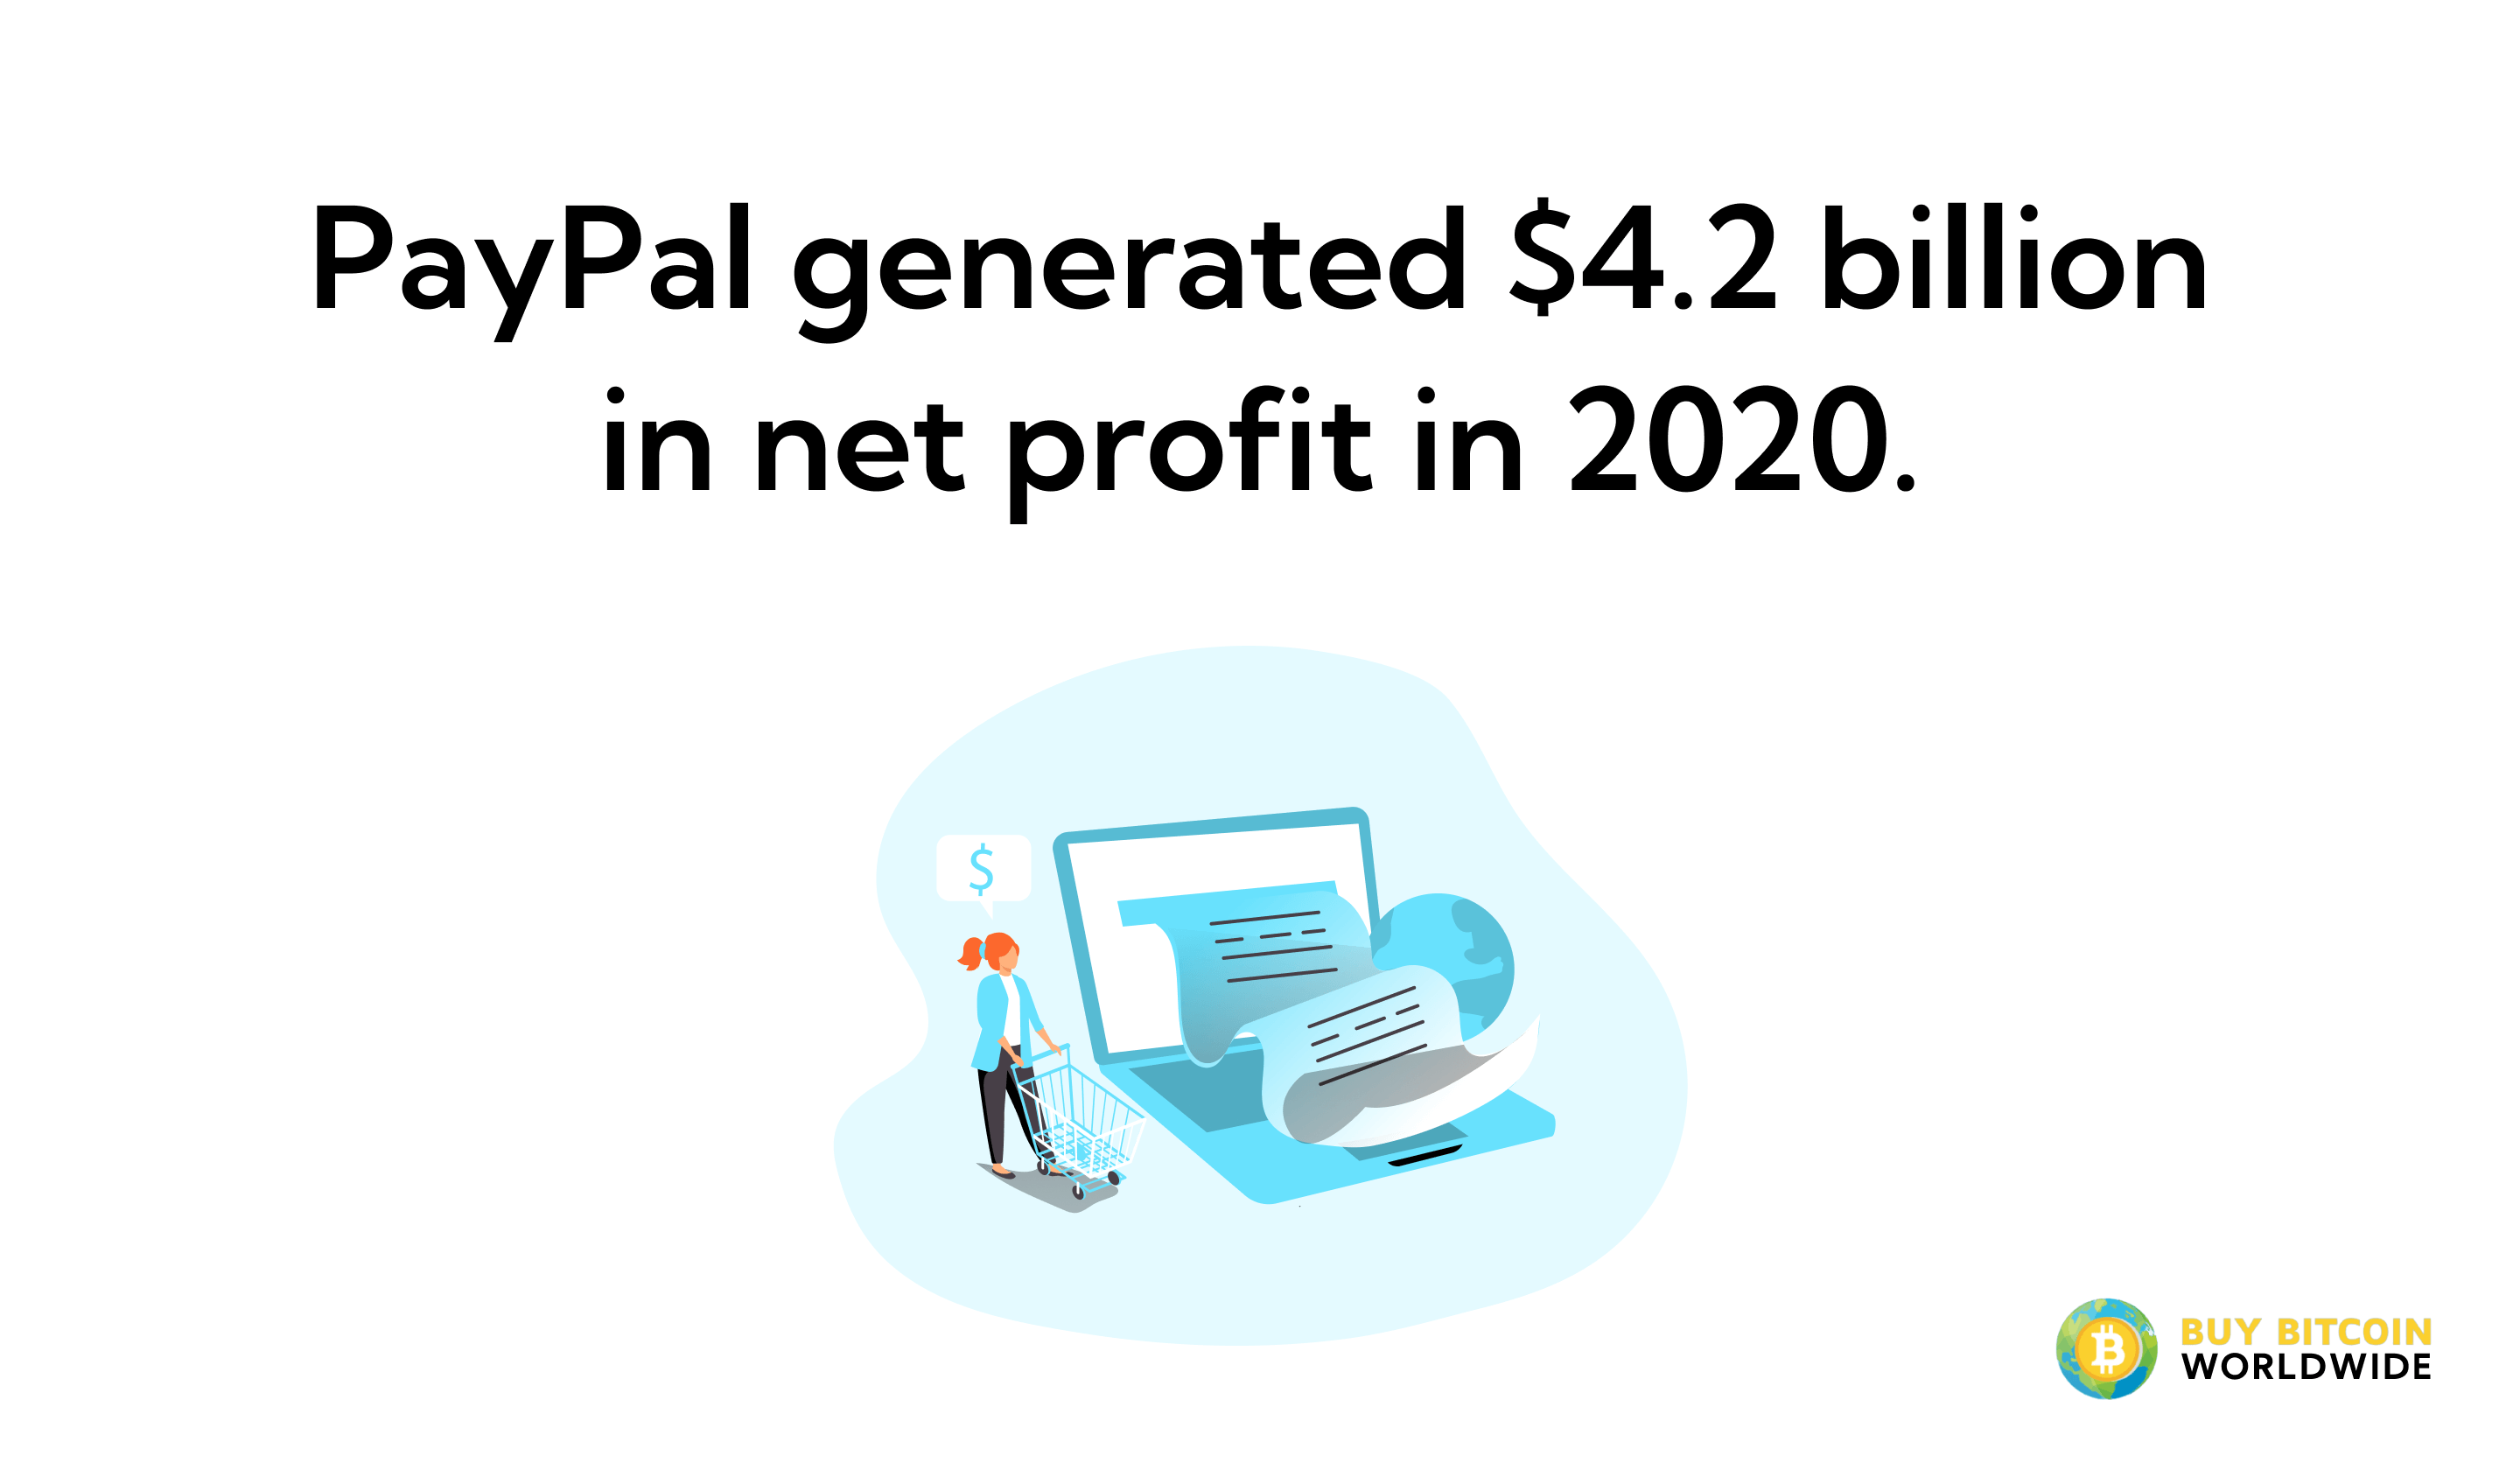 paypal profit was $4.2 billion in 2020